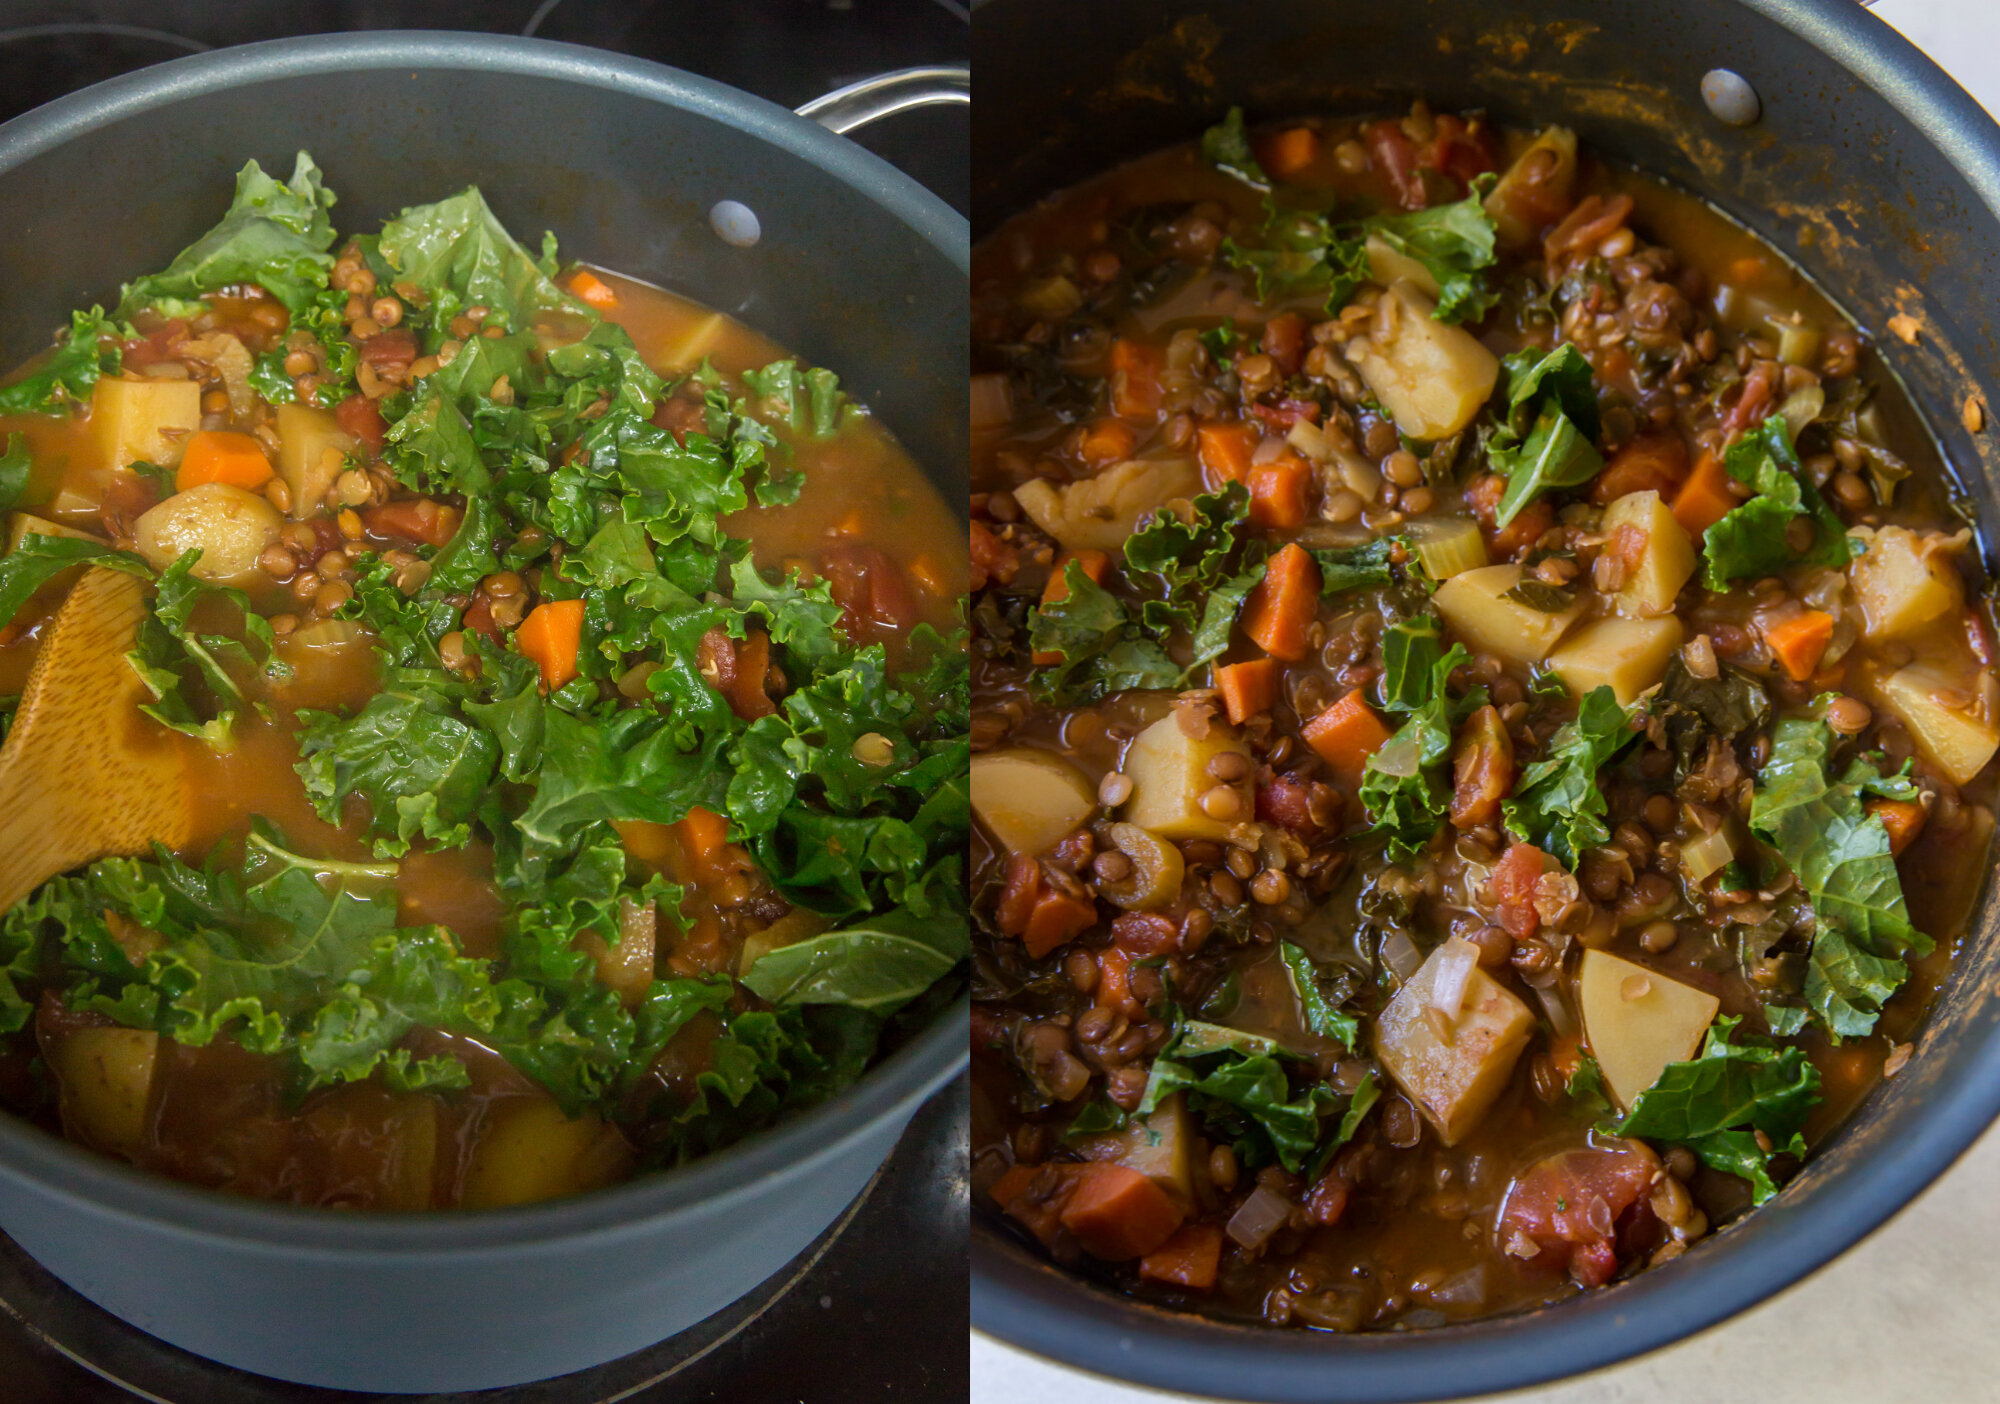 steps to make lentil stew 2.jpg